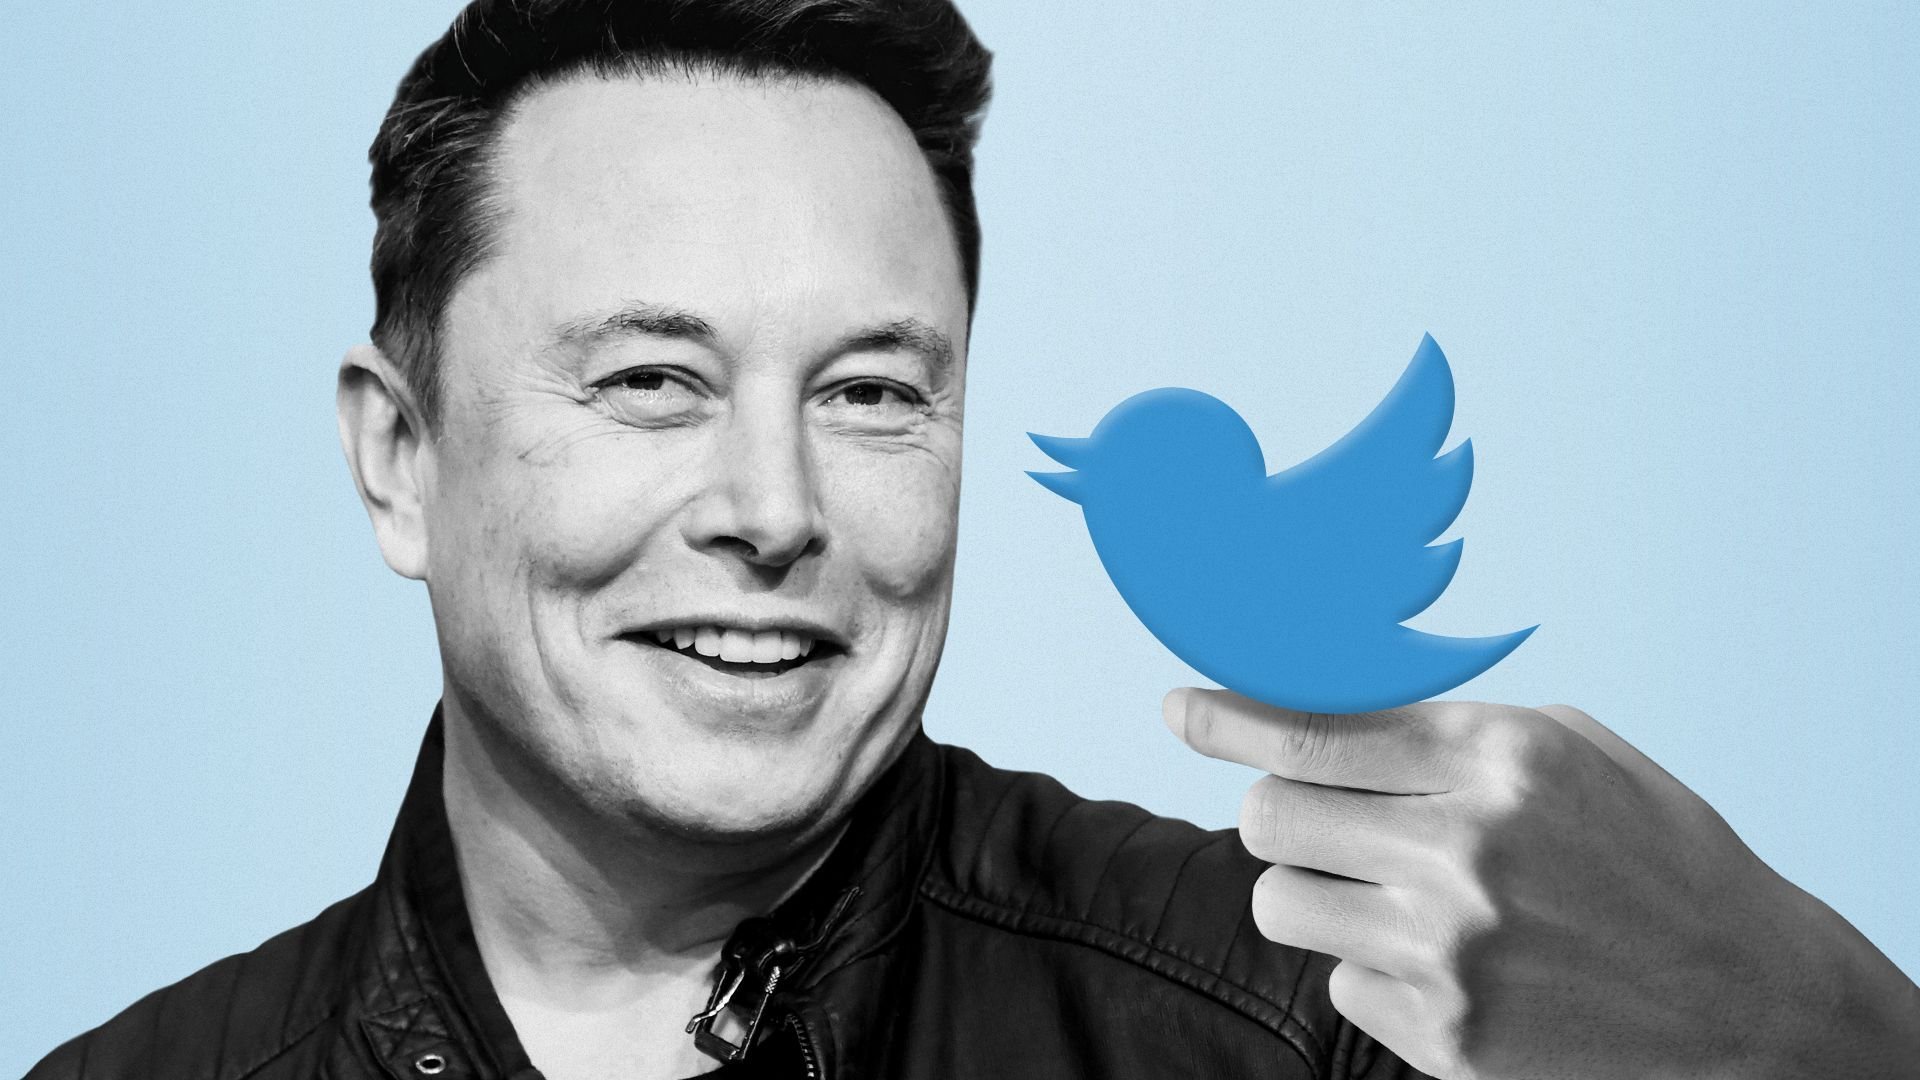 Elon Musk says he'll get rid of Twitter's famous bird logo in favor of an X